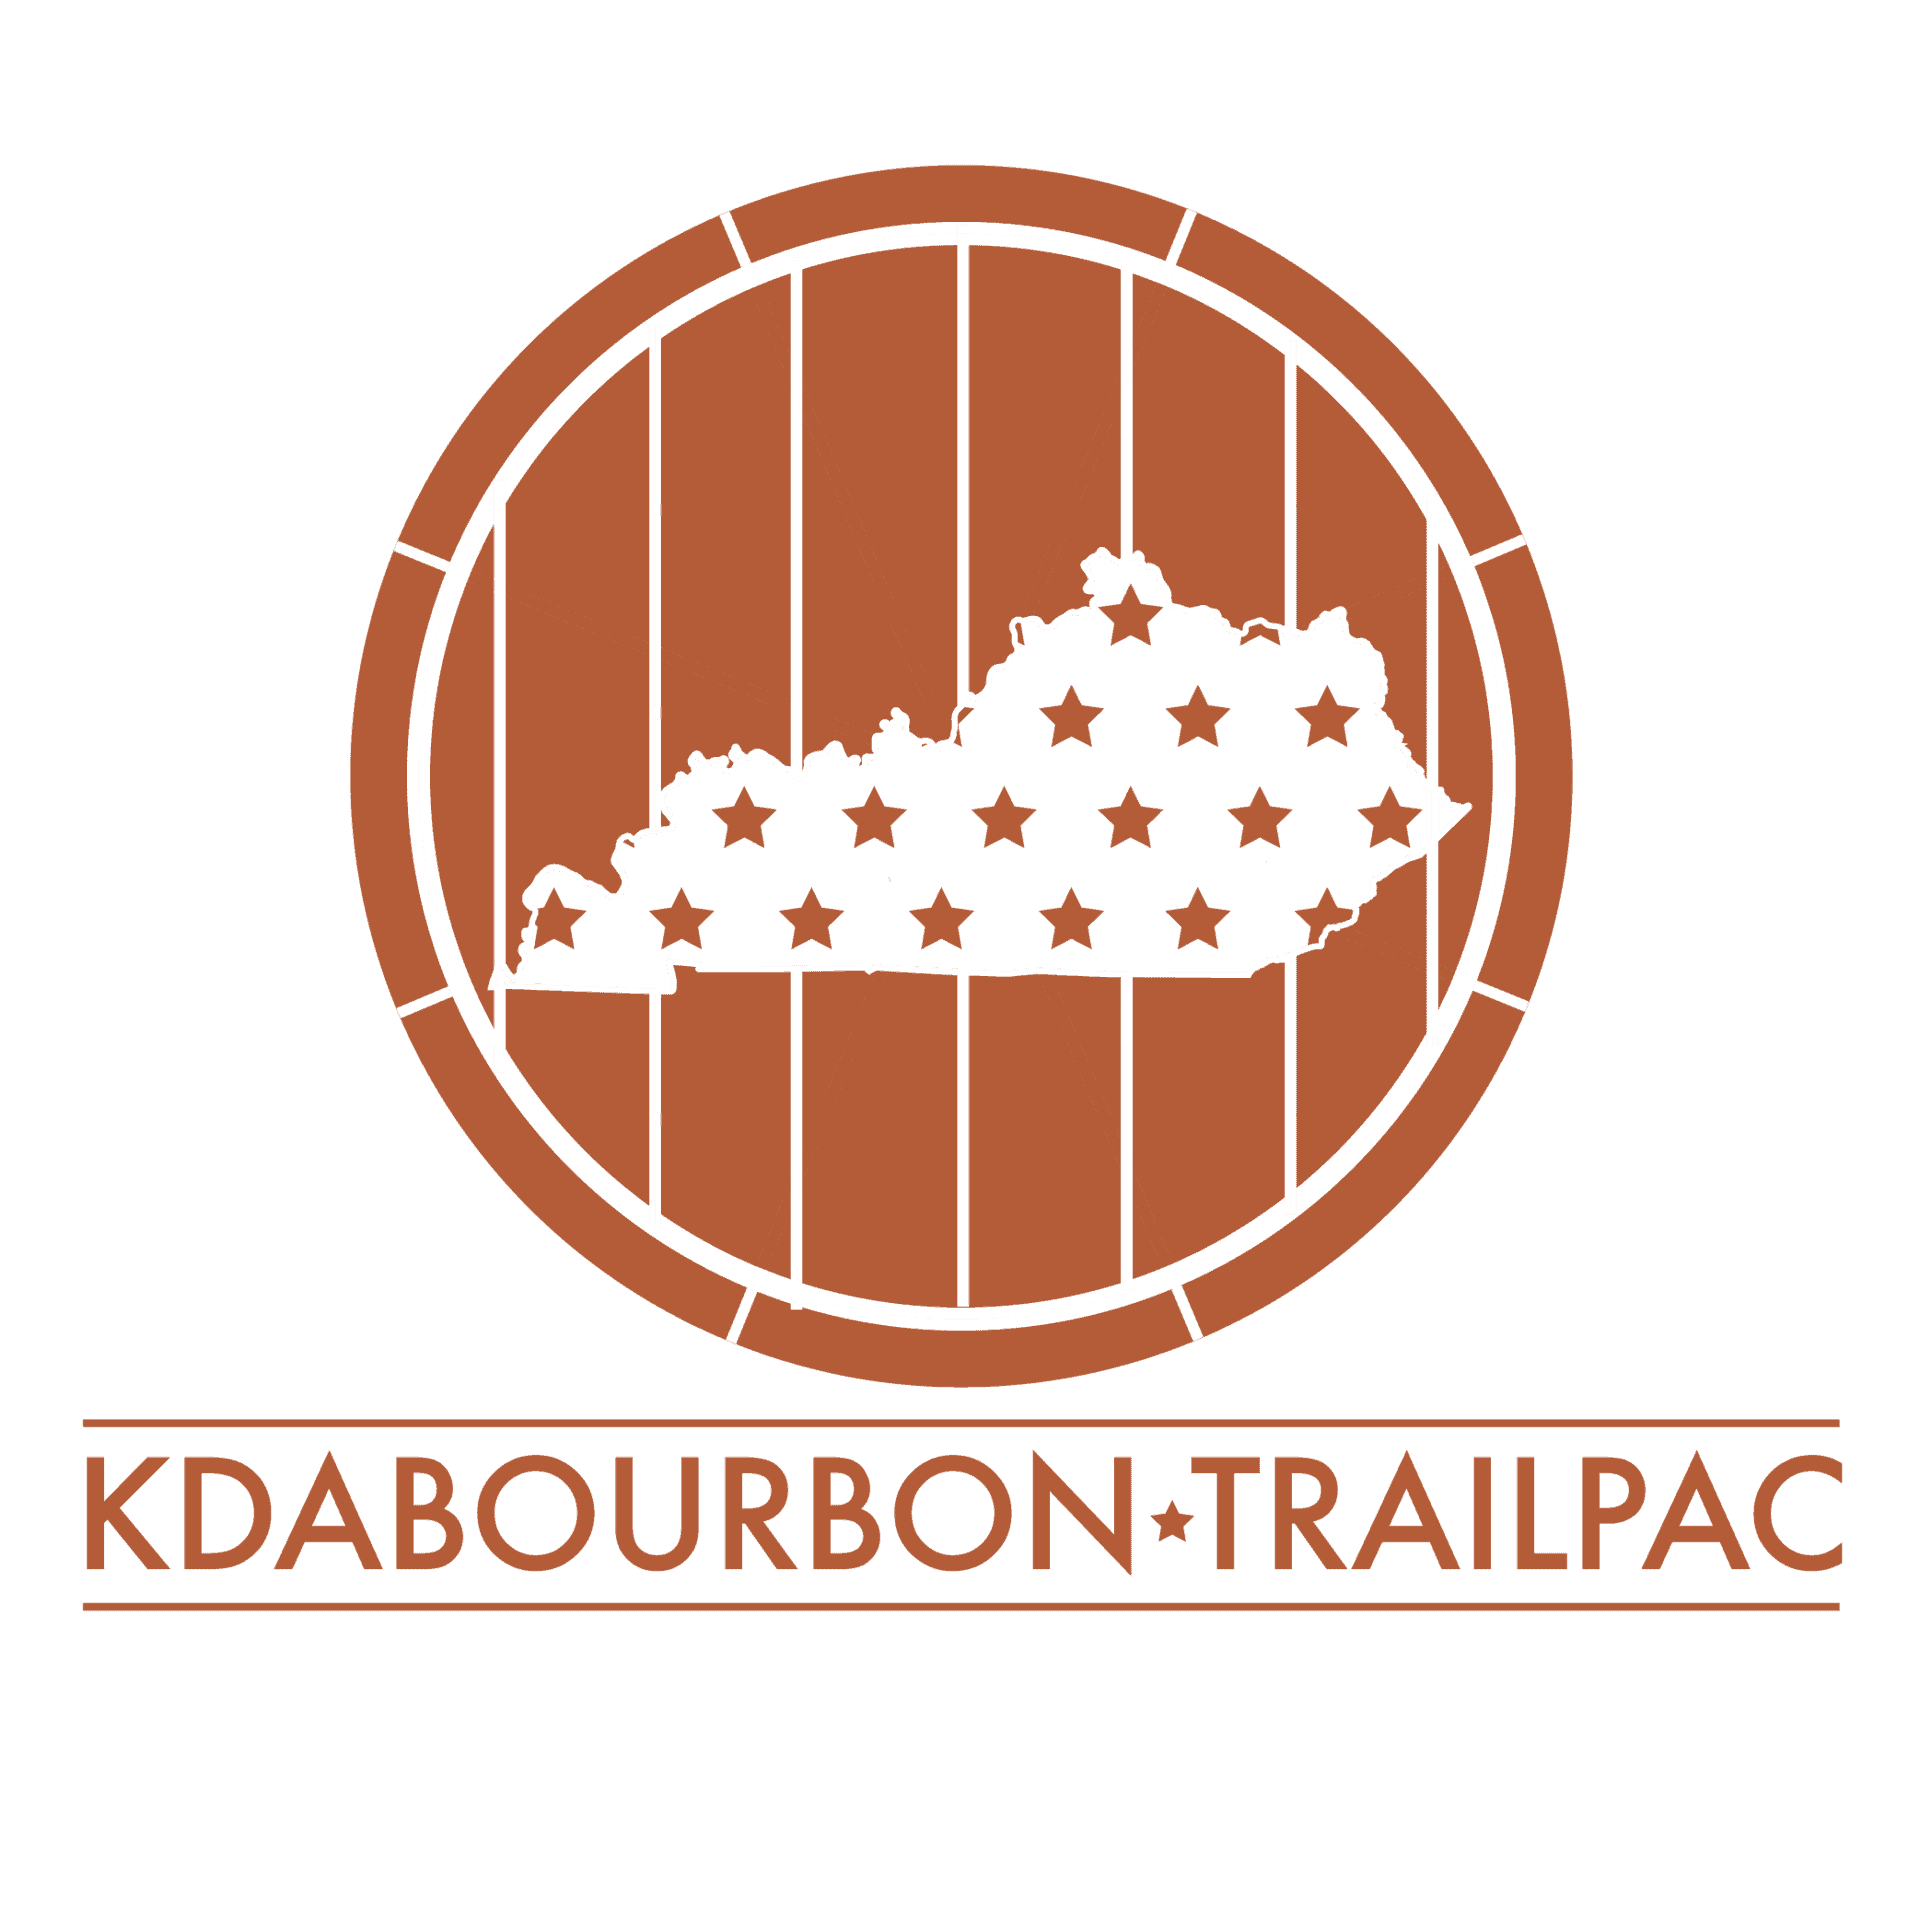 KDA Bourbon Trail PAC Logo